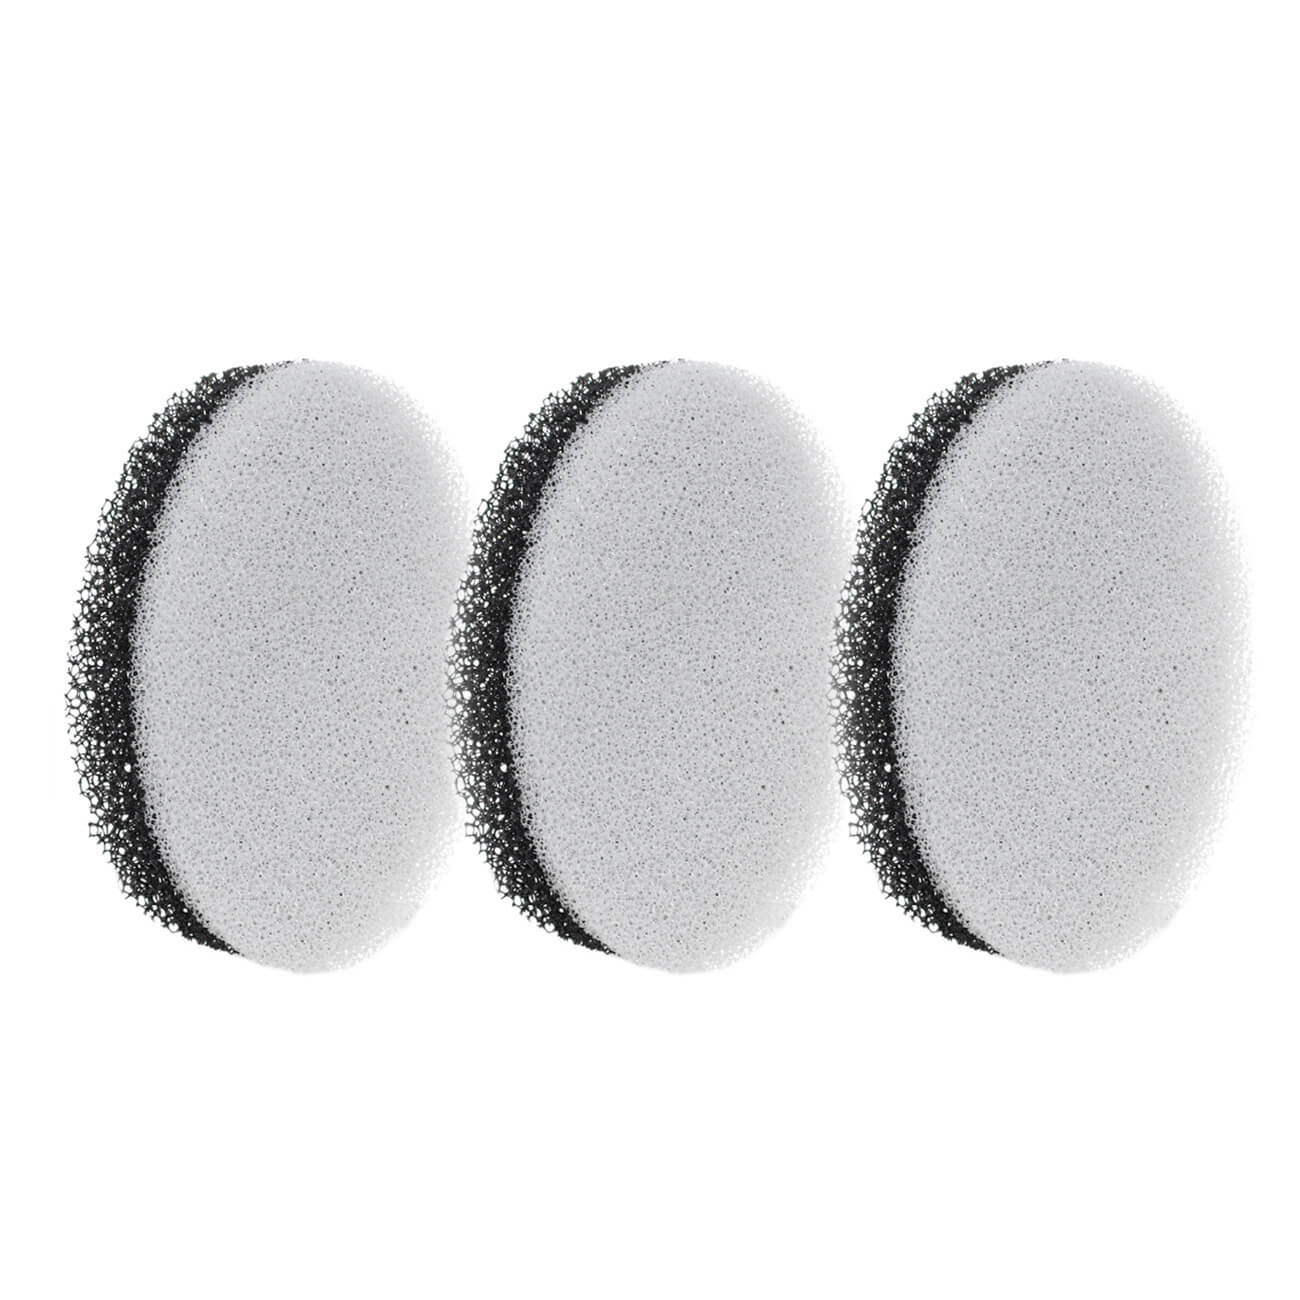 Sponge for washing dishes, 9x6 cm, 3 pcs, abrasive, oval, black and gray, Black clean изображение № 1